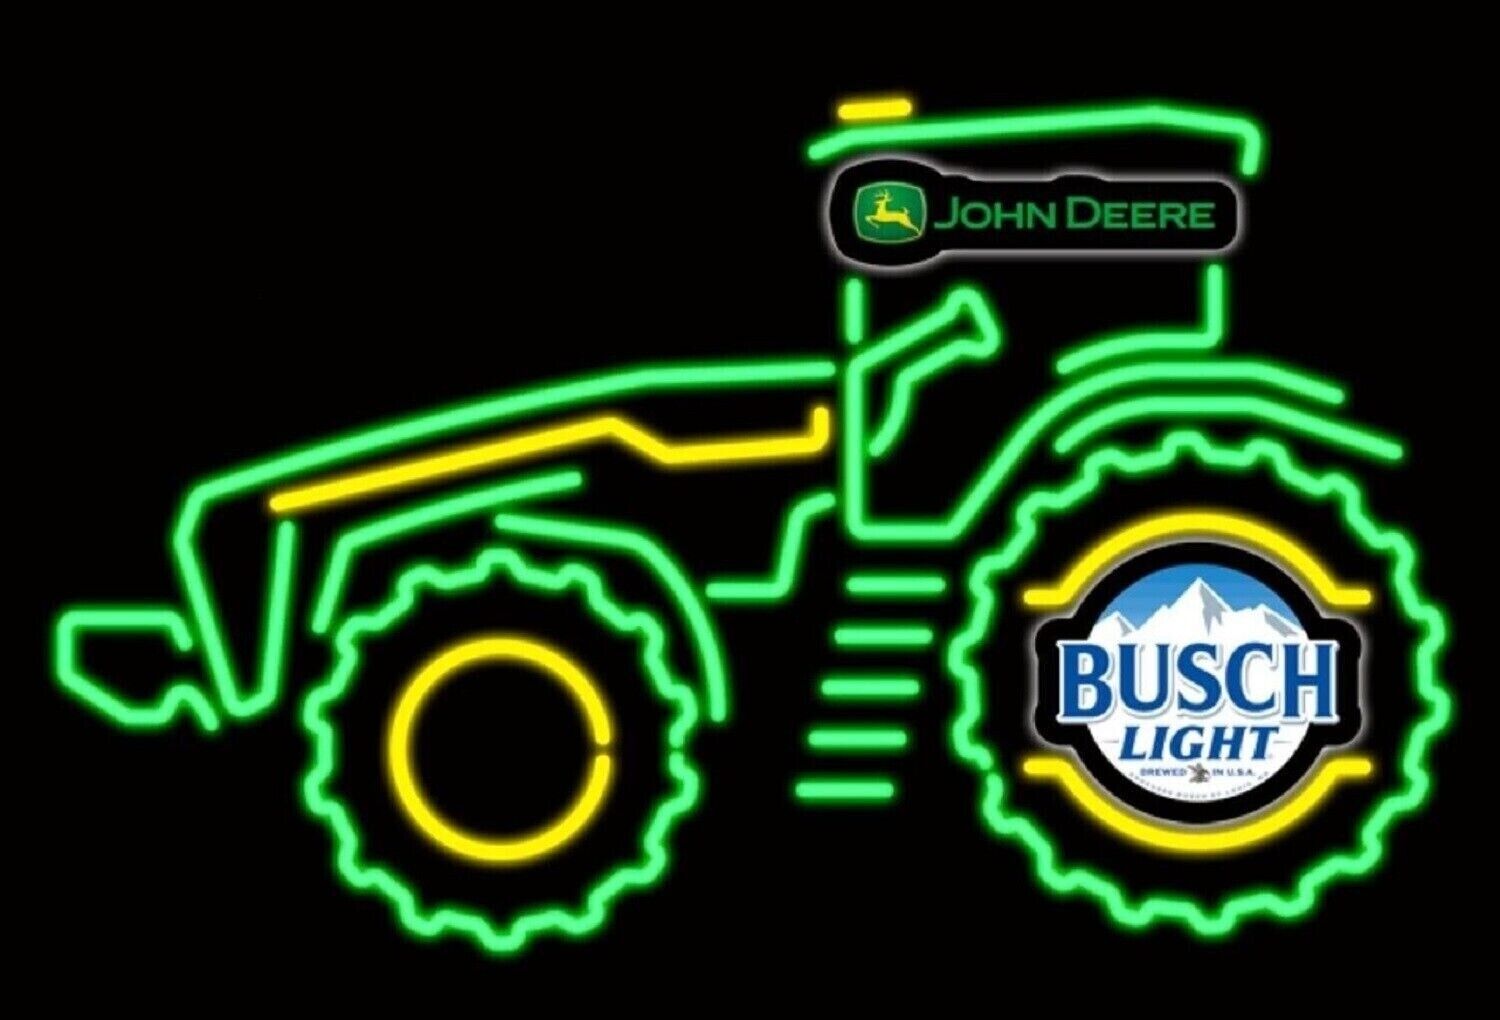 John Deere Farm Tractor Busch Light Beer Neon Light LED Lamp Sign With Dimmer